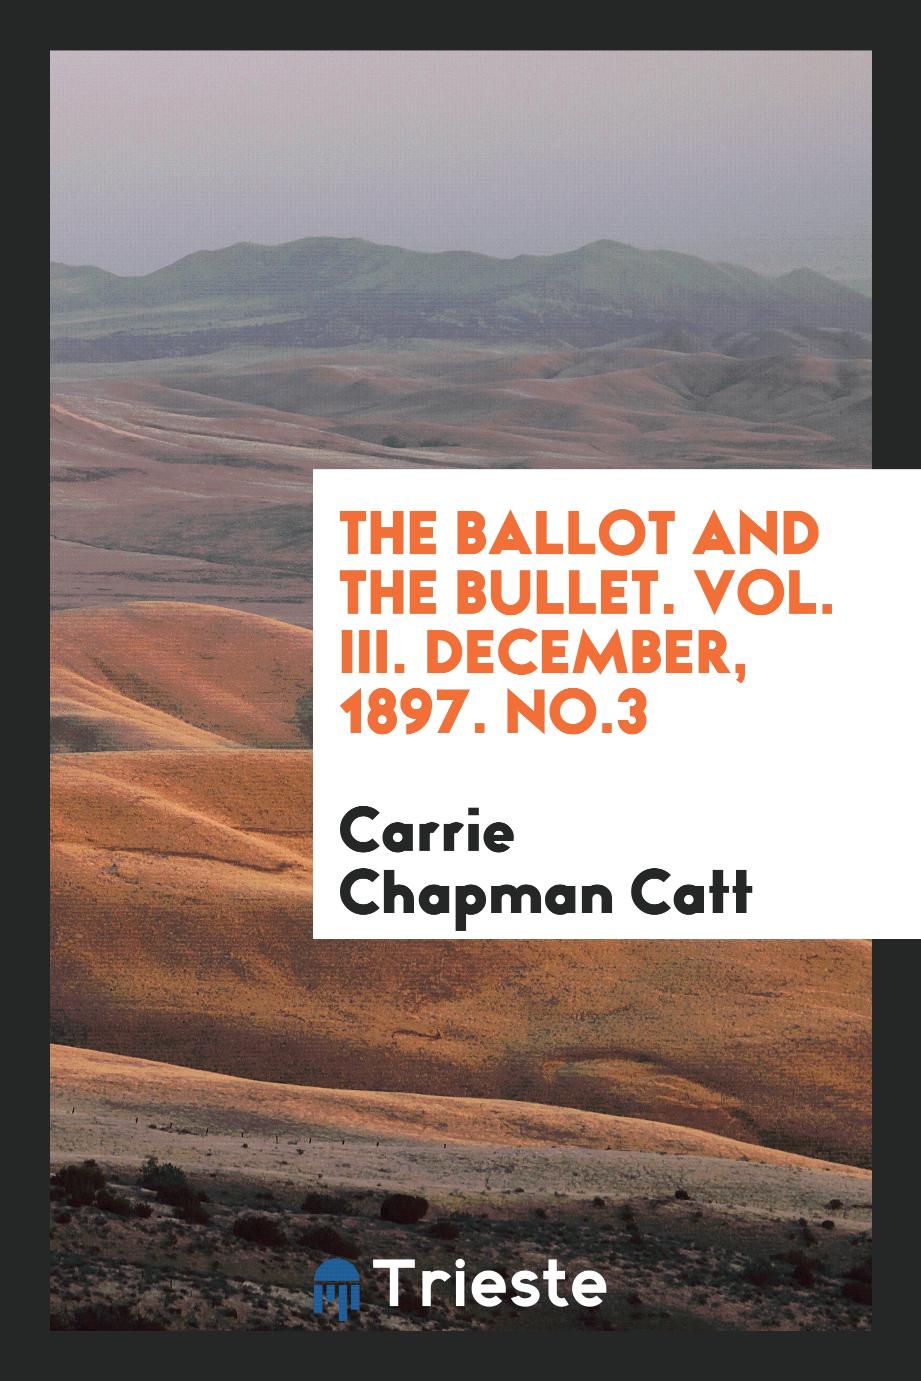 Carrie Chapman Catt - The Ballot and the Bullet. Vol. III. December, 1897. No.3